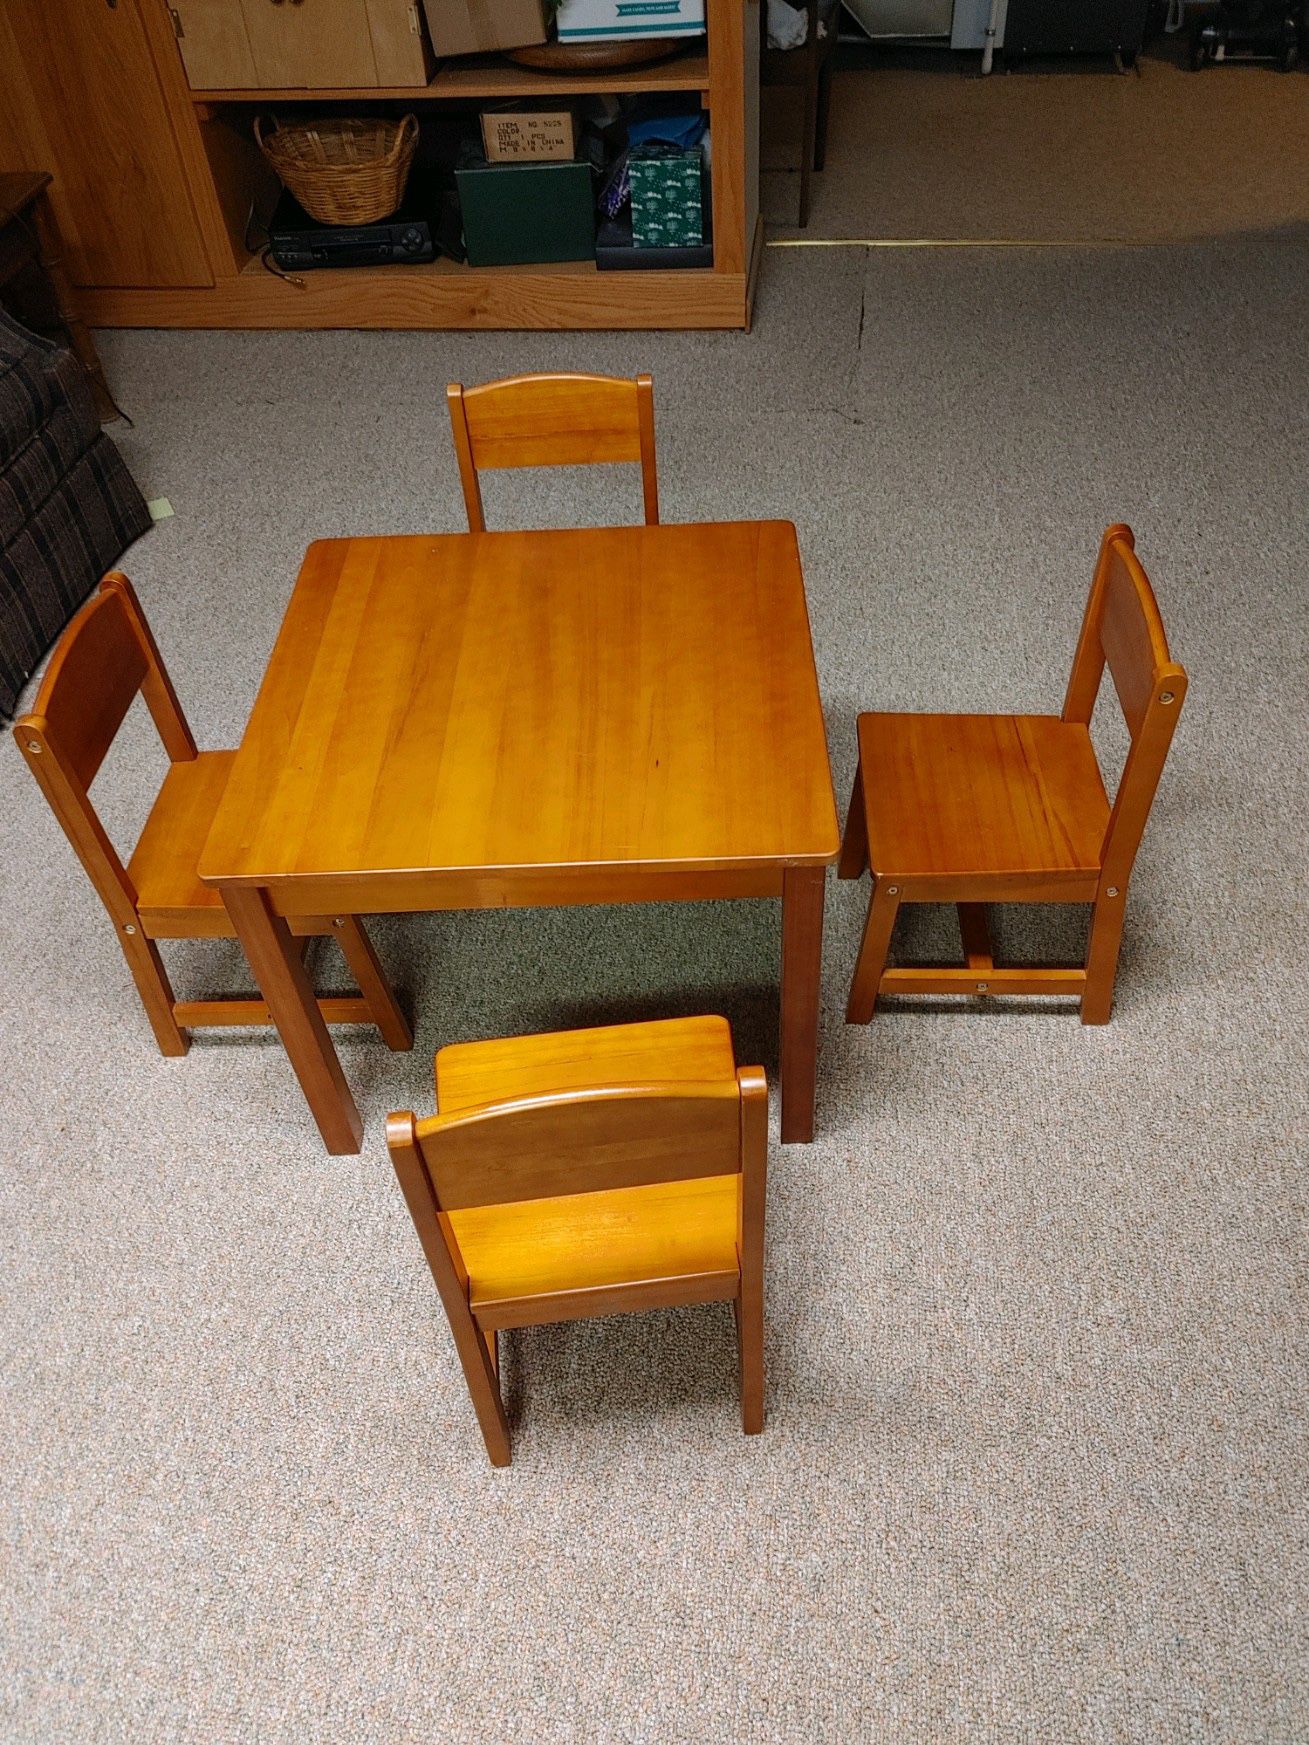 kidKraft Farmhouse Table & 4 chairs